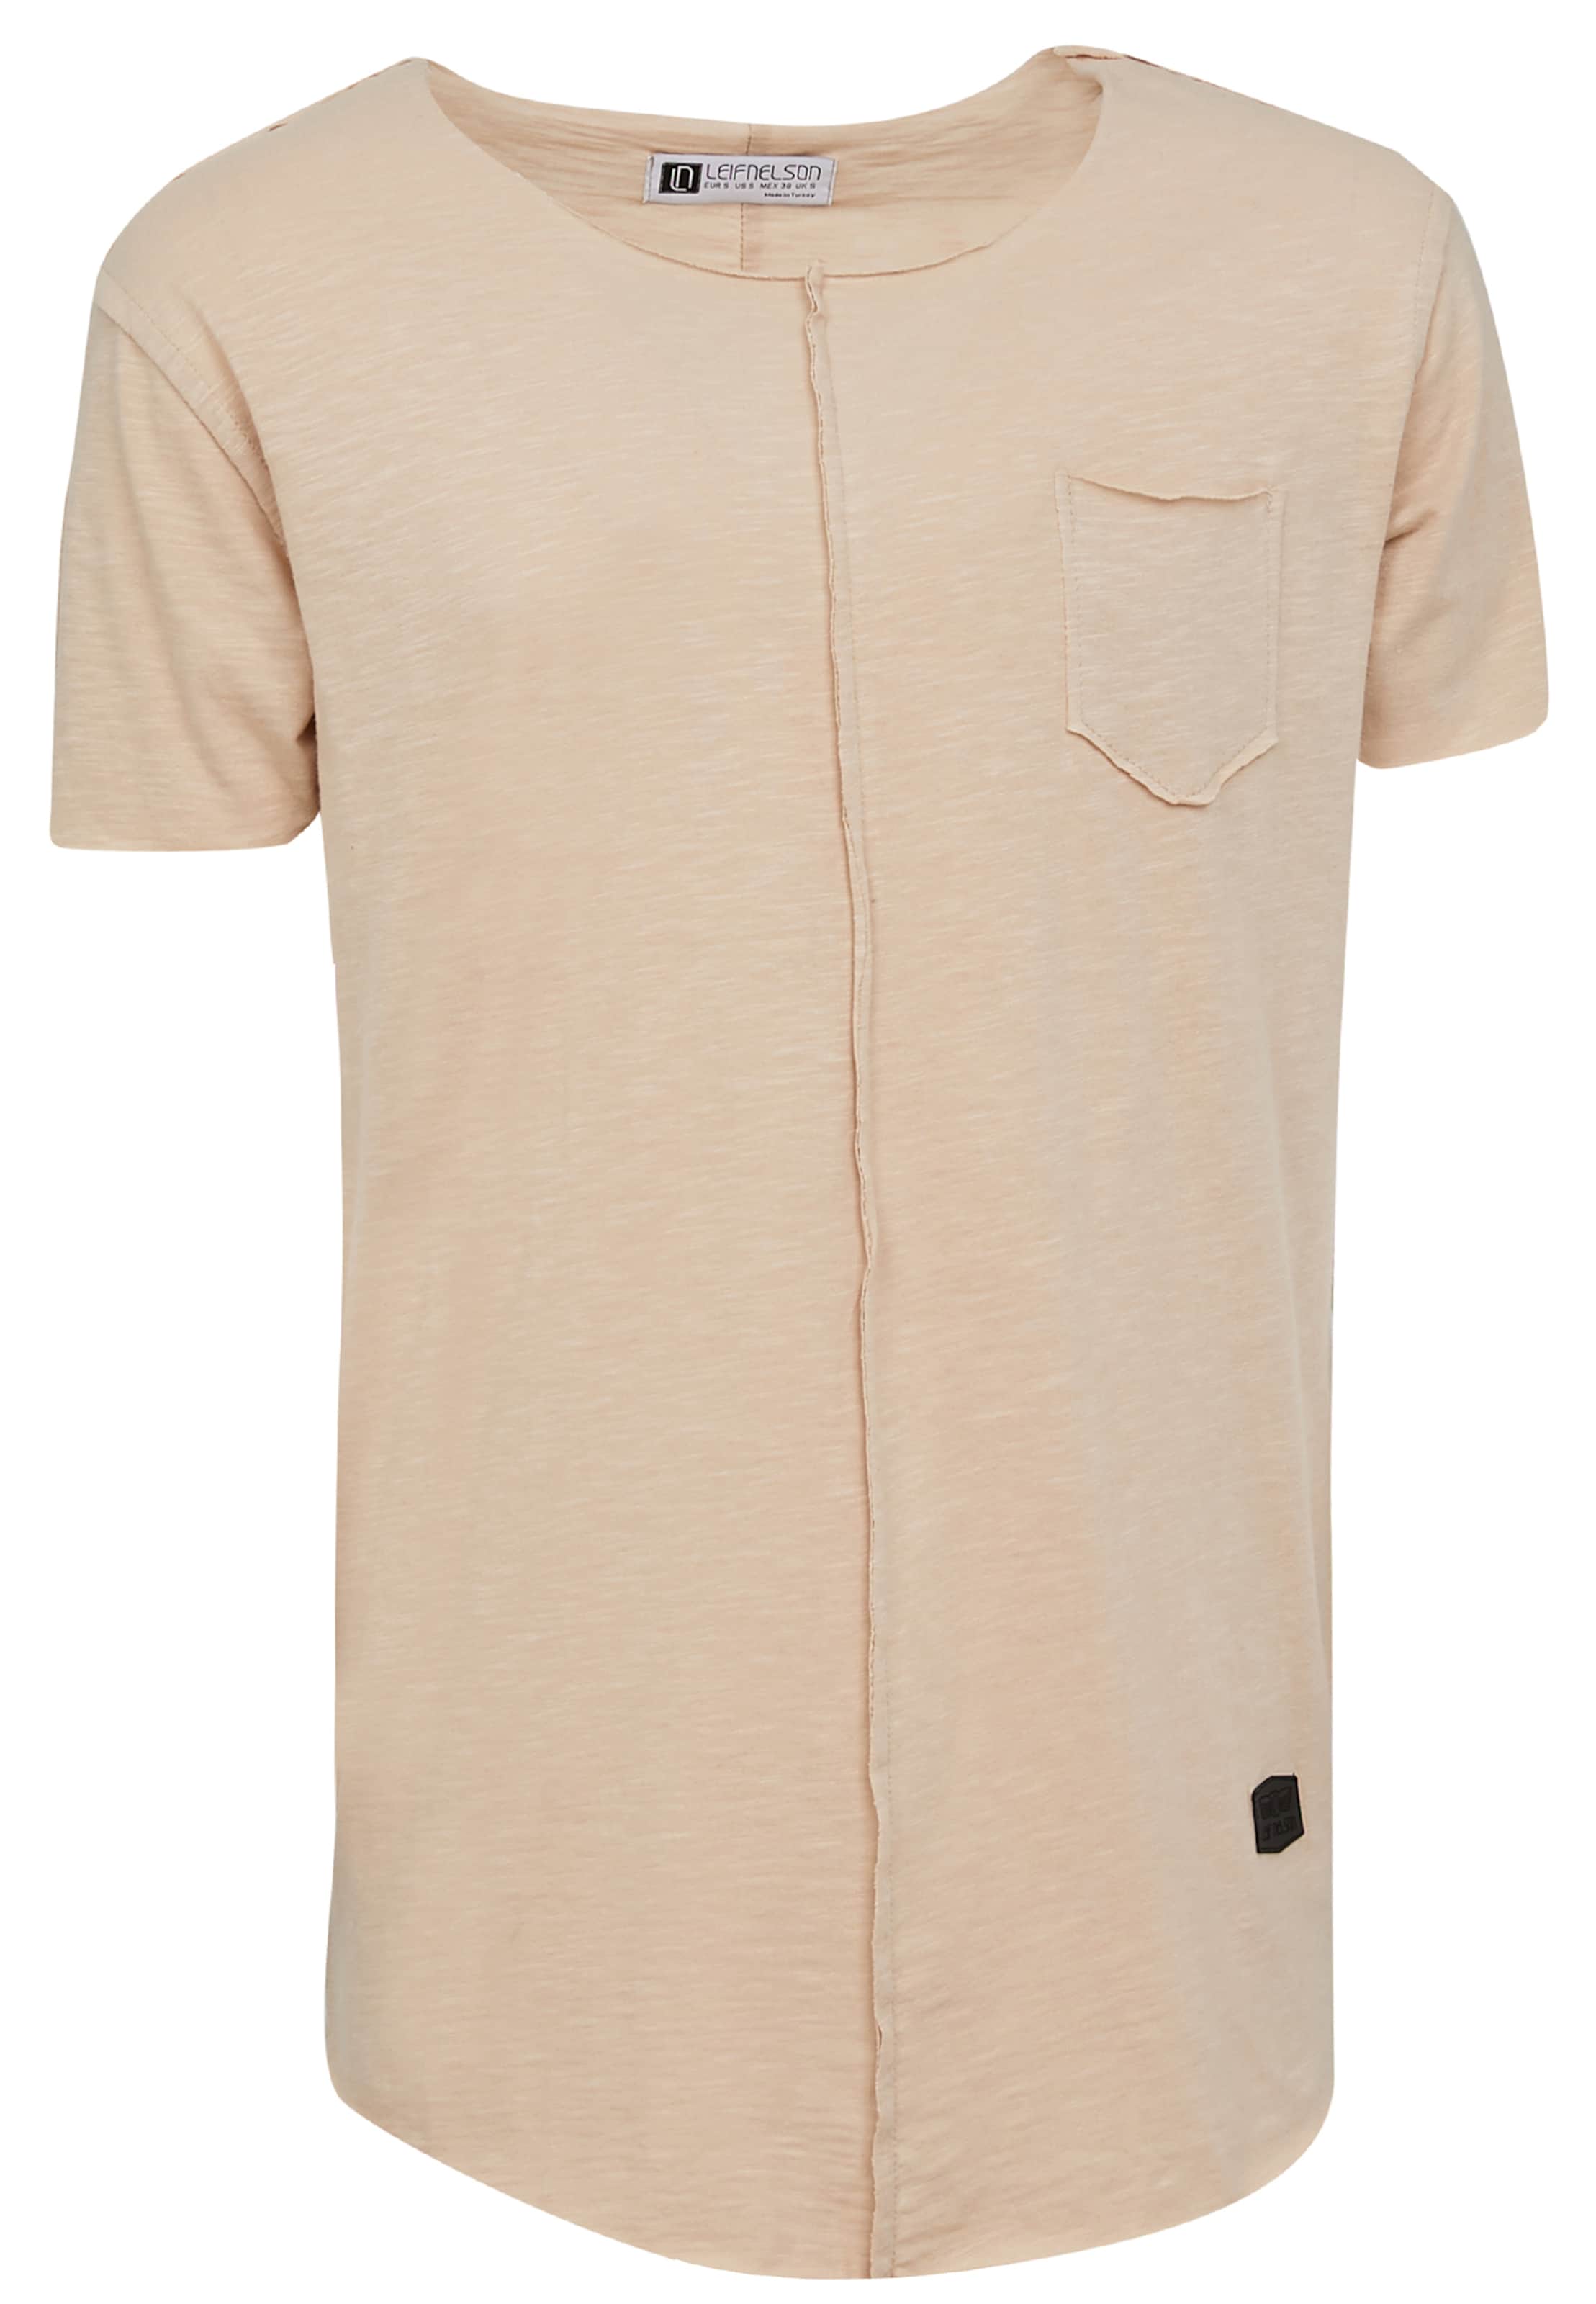 Männer Shirts Leif Nelson T-Shirt Rundhals in Beige - XU66812